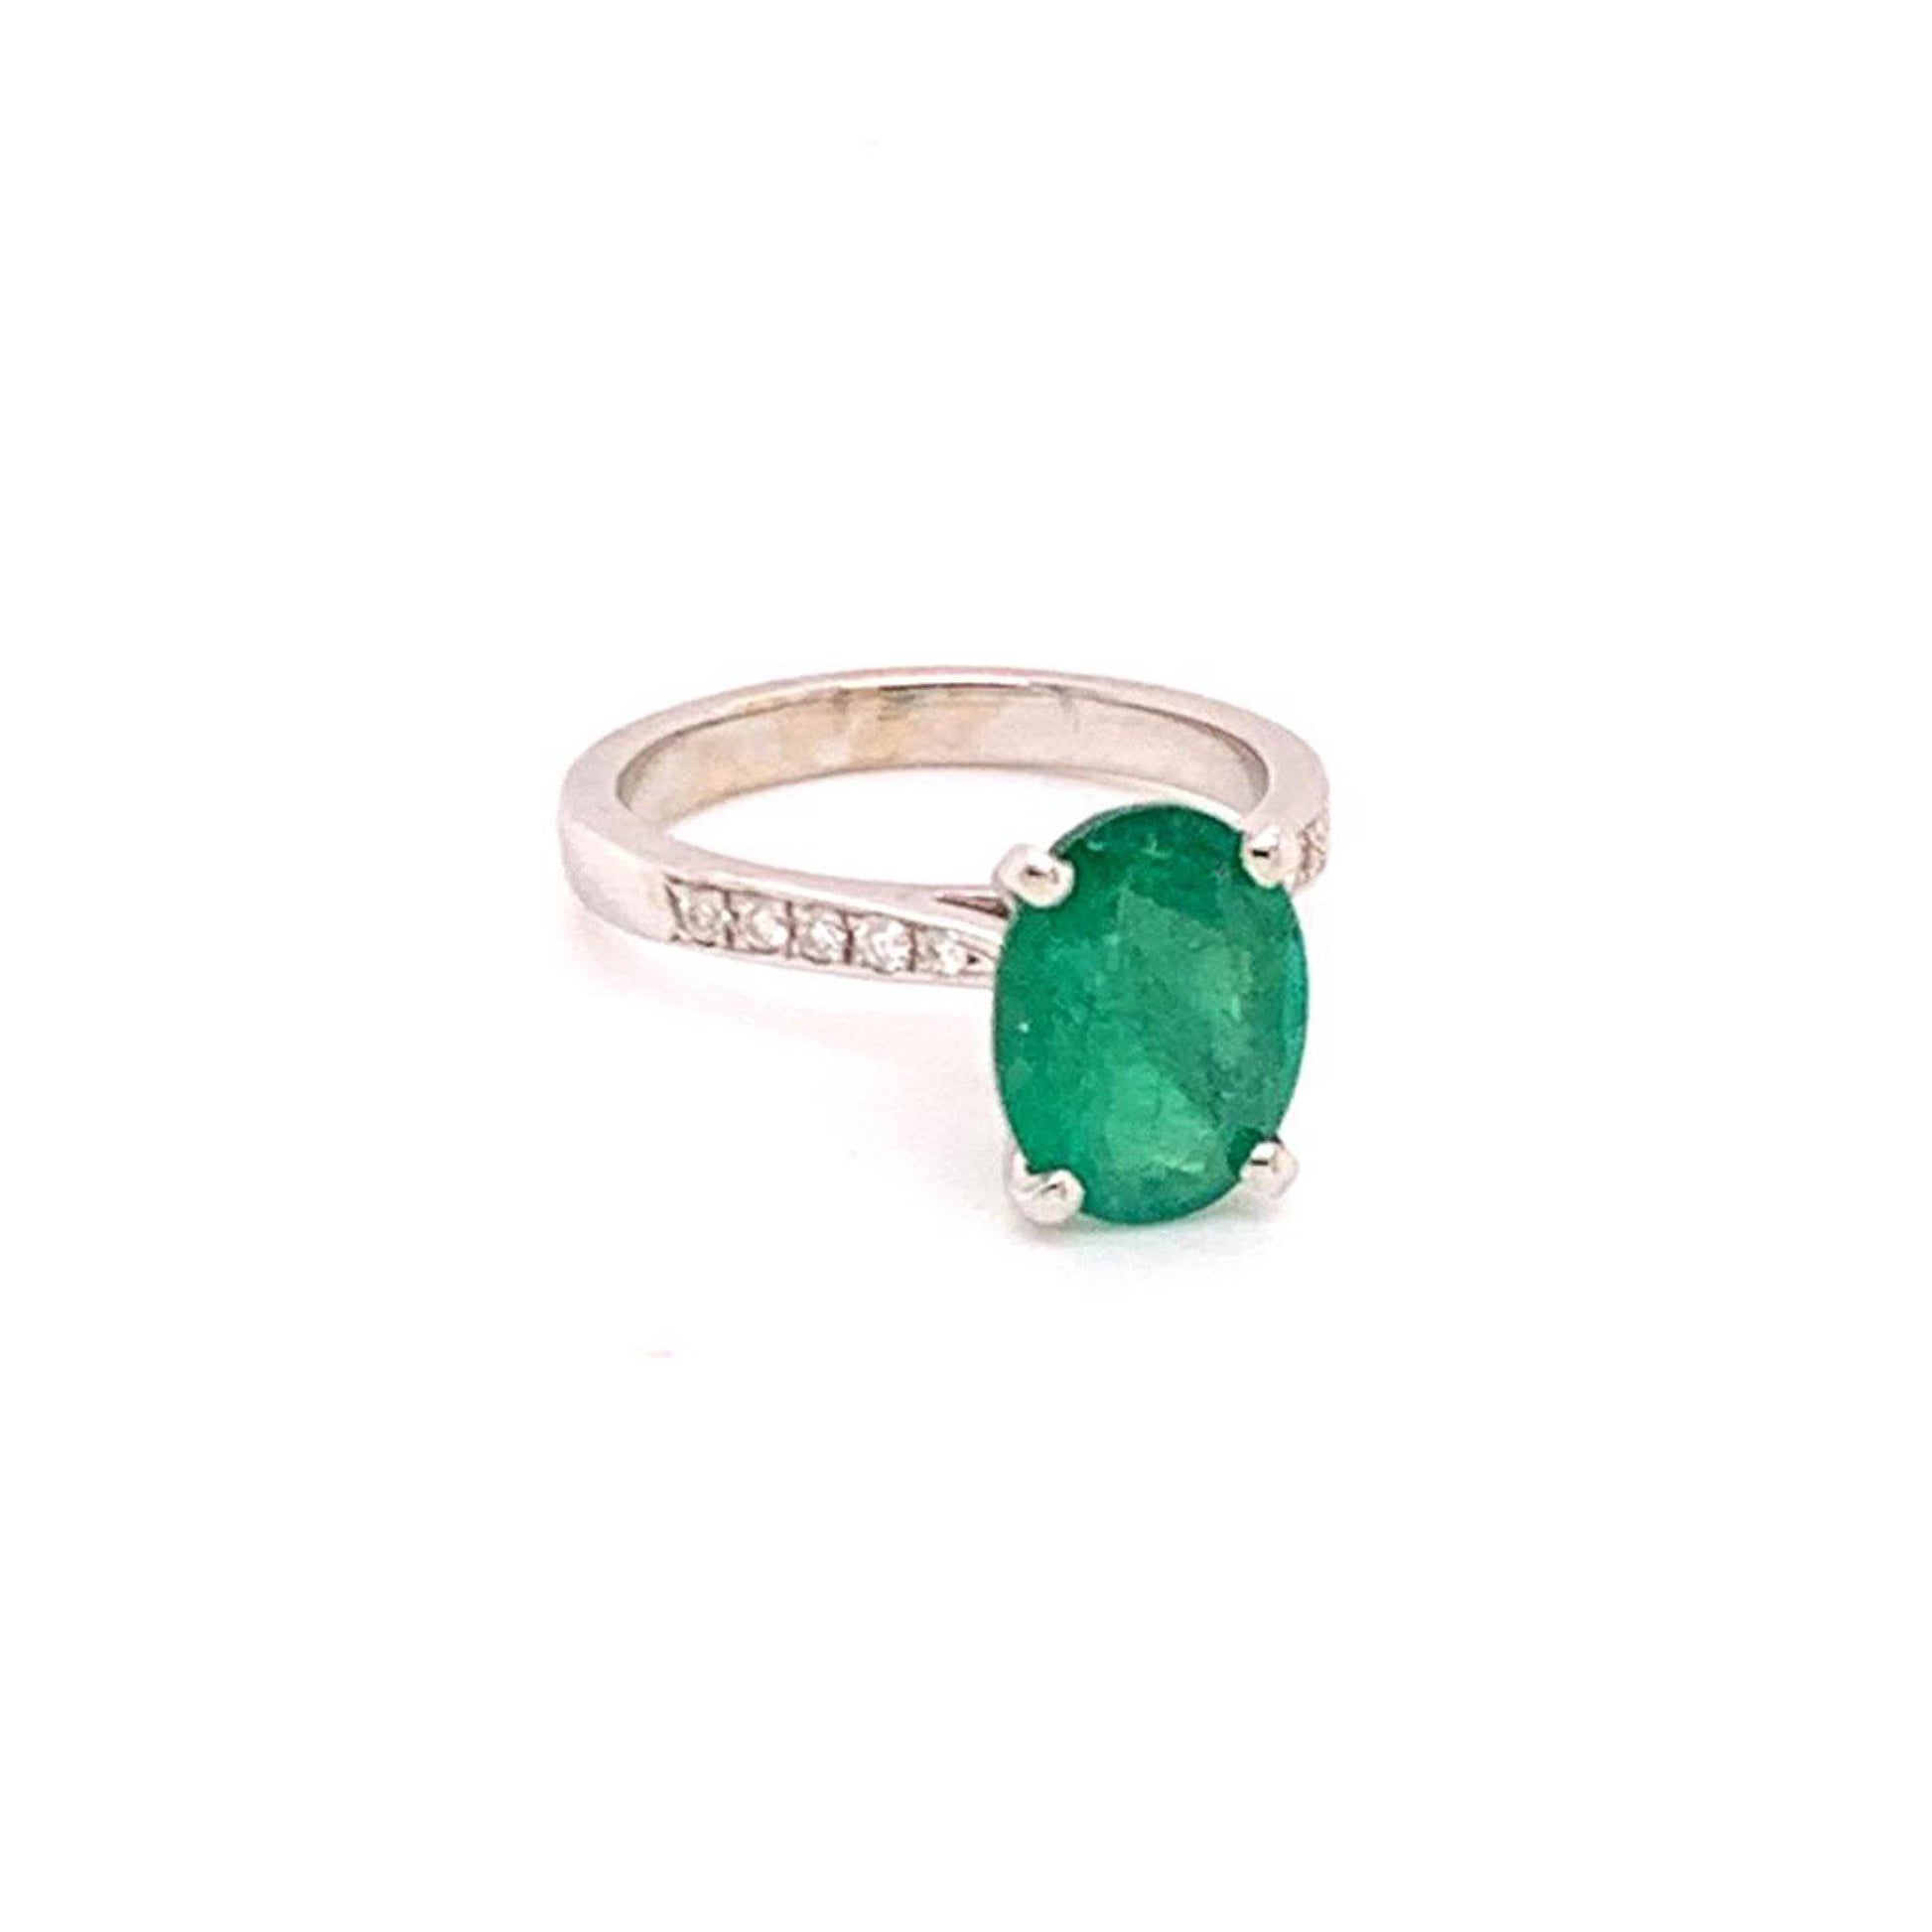 Emerald Diamond Ring 14k Gold 1.83 TCW Certified $3,950 920738 - Certified Estate Jewelry